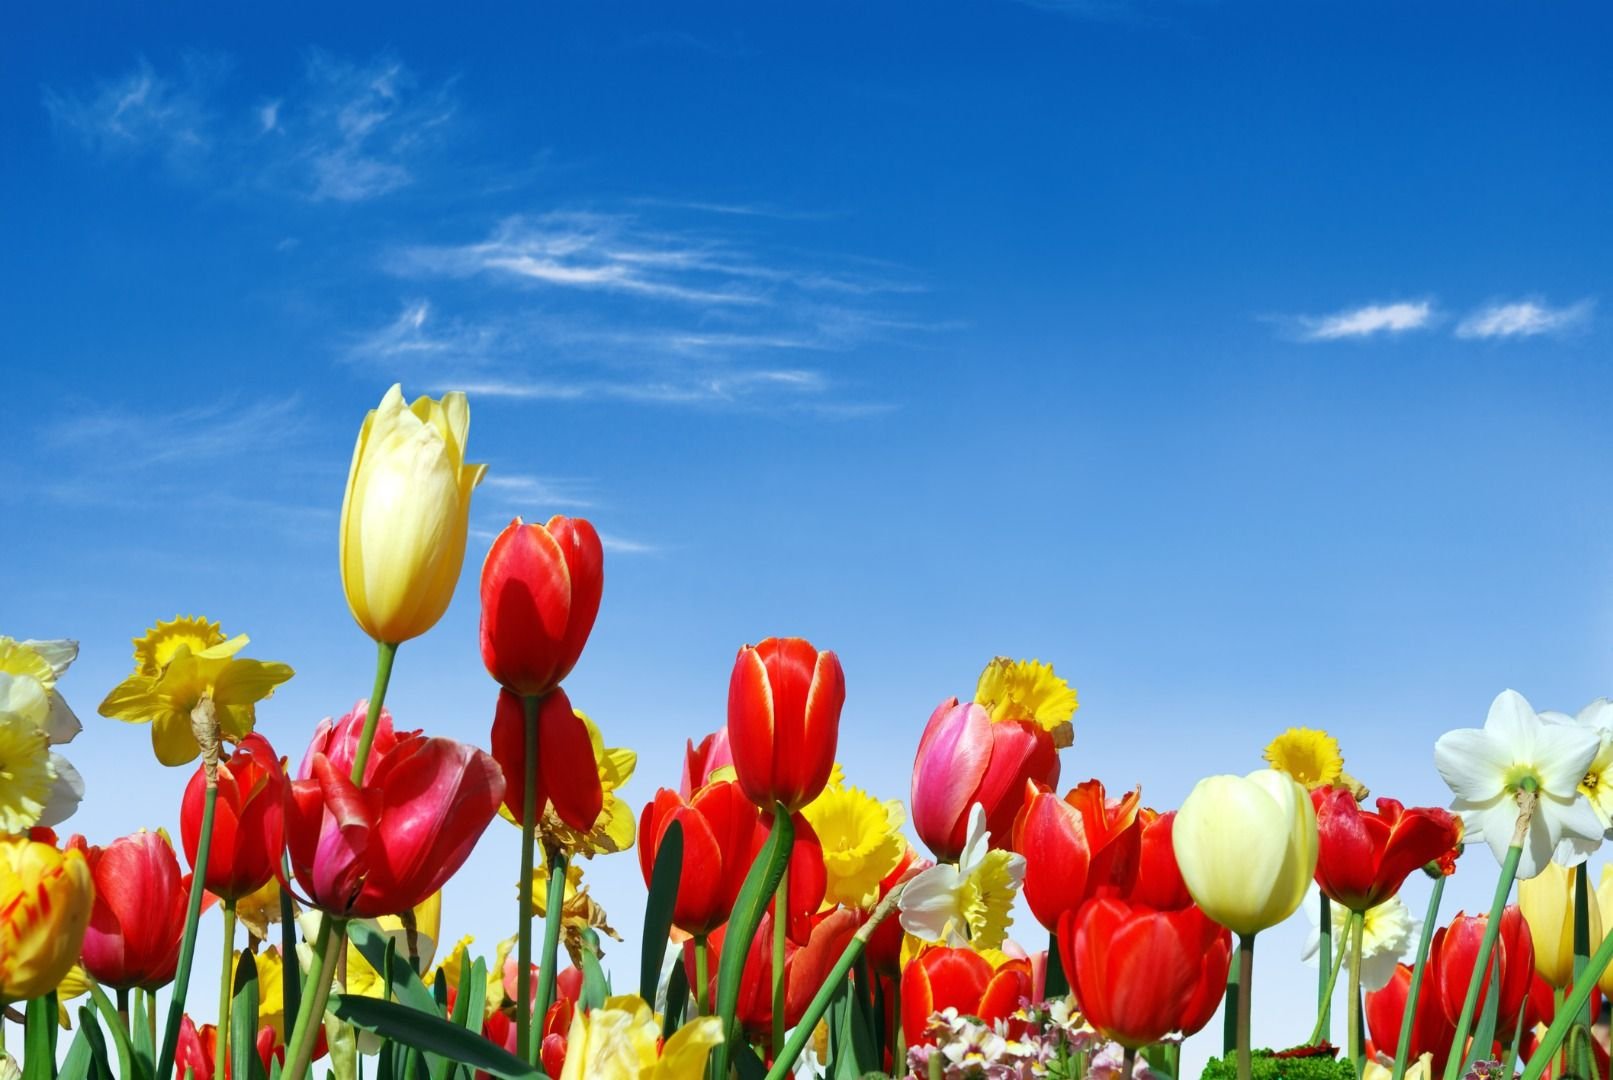 various-spring-flowers-towards-the-blue-sky-4546482.jpg